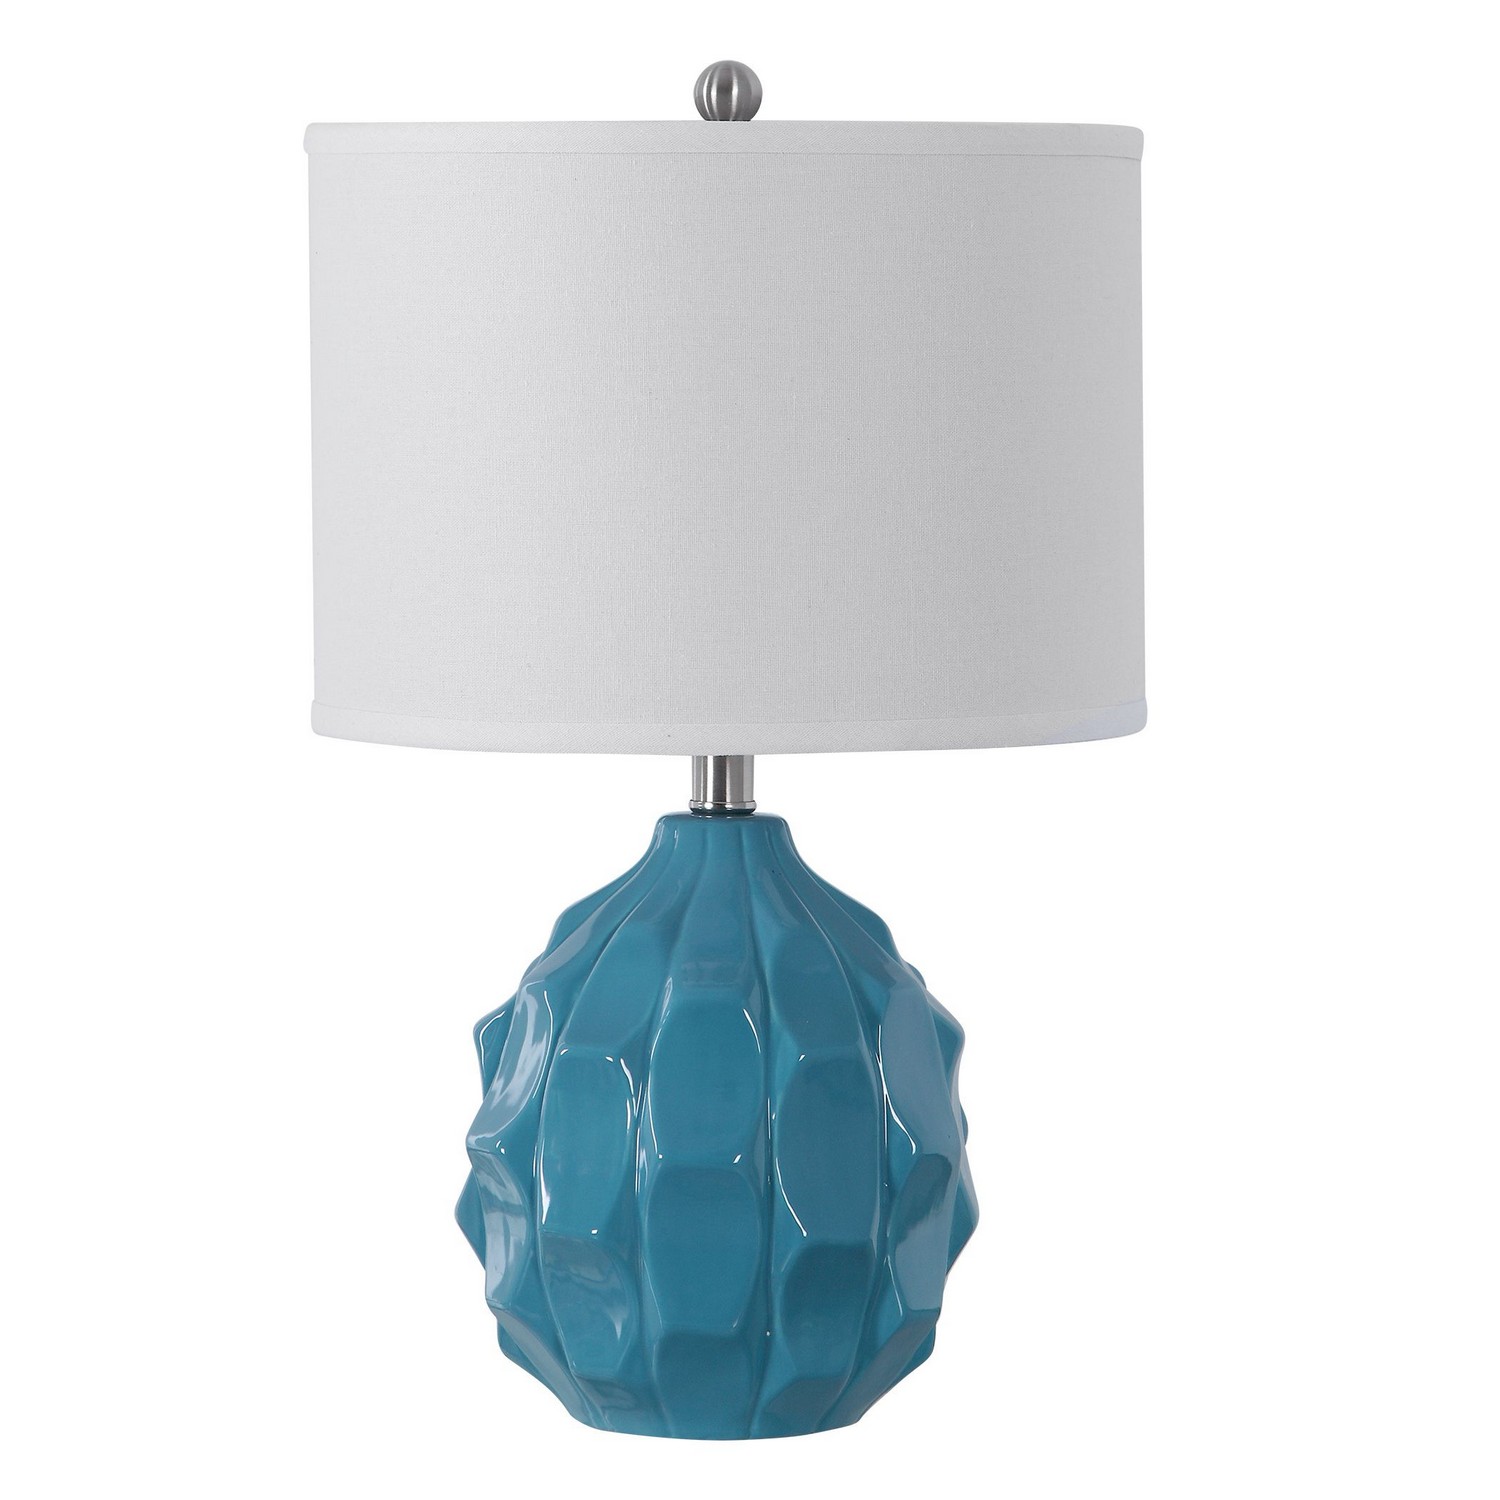 Uttermost W26042-1 Table Lamp - Light Blue